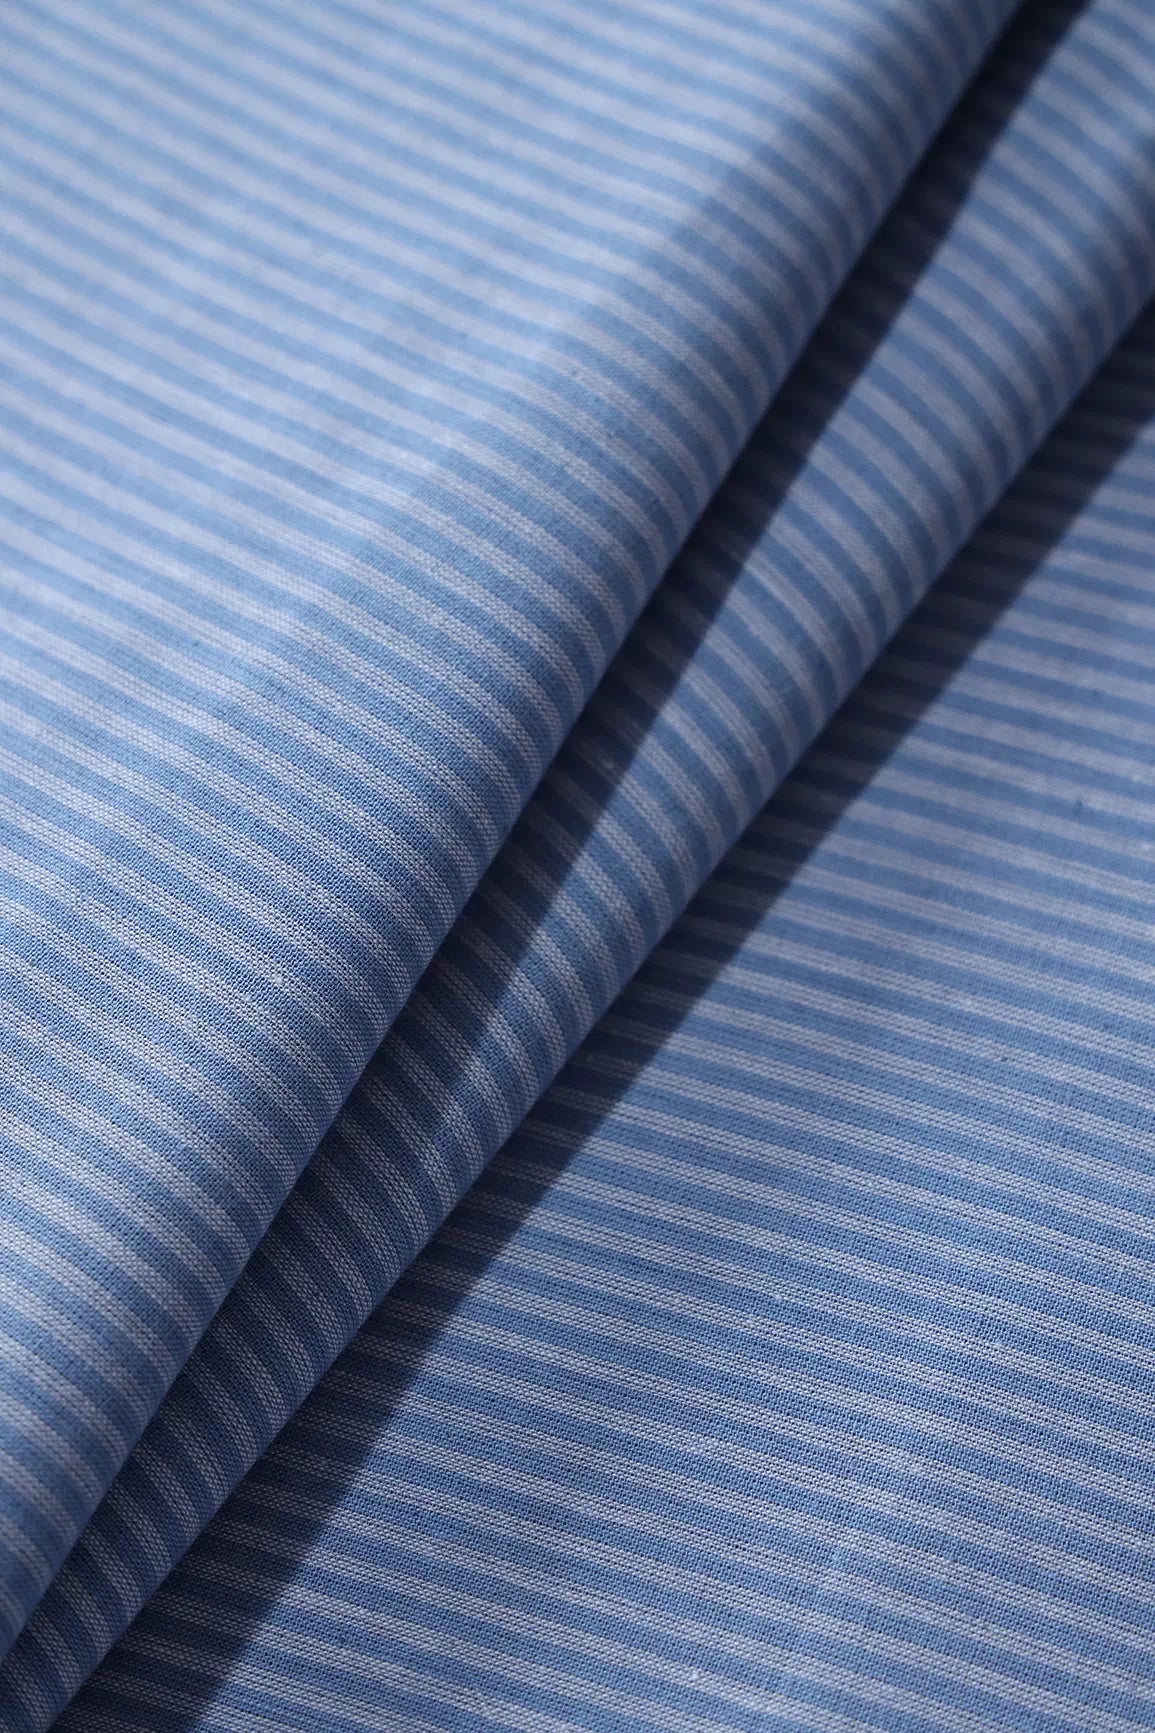 Blue Stripes Pattern Handwoven Organic Cotton Fabric